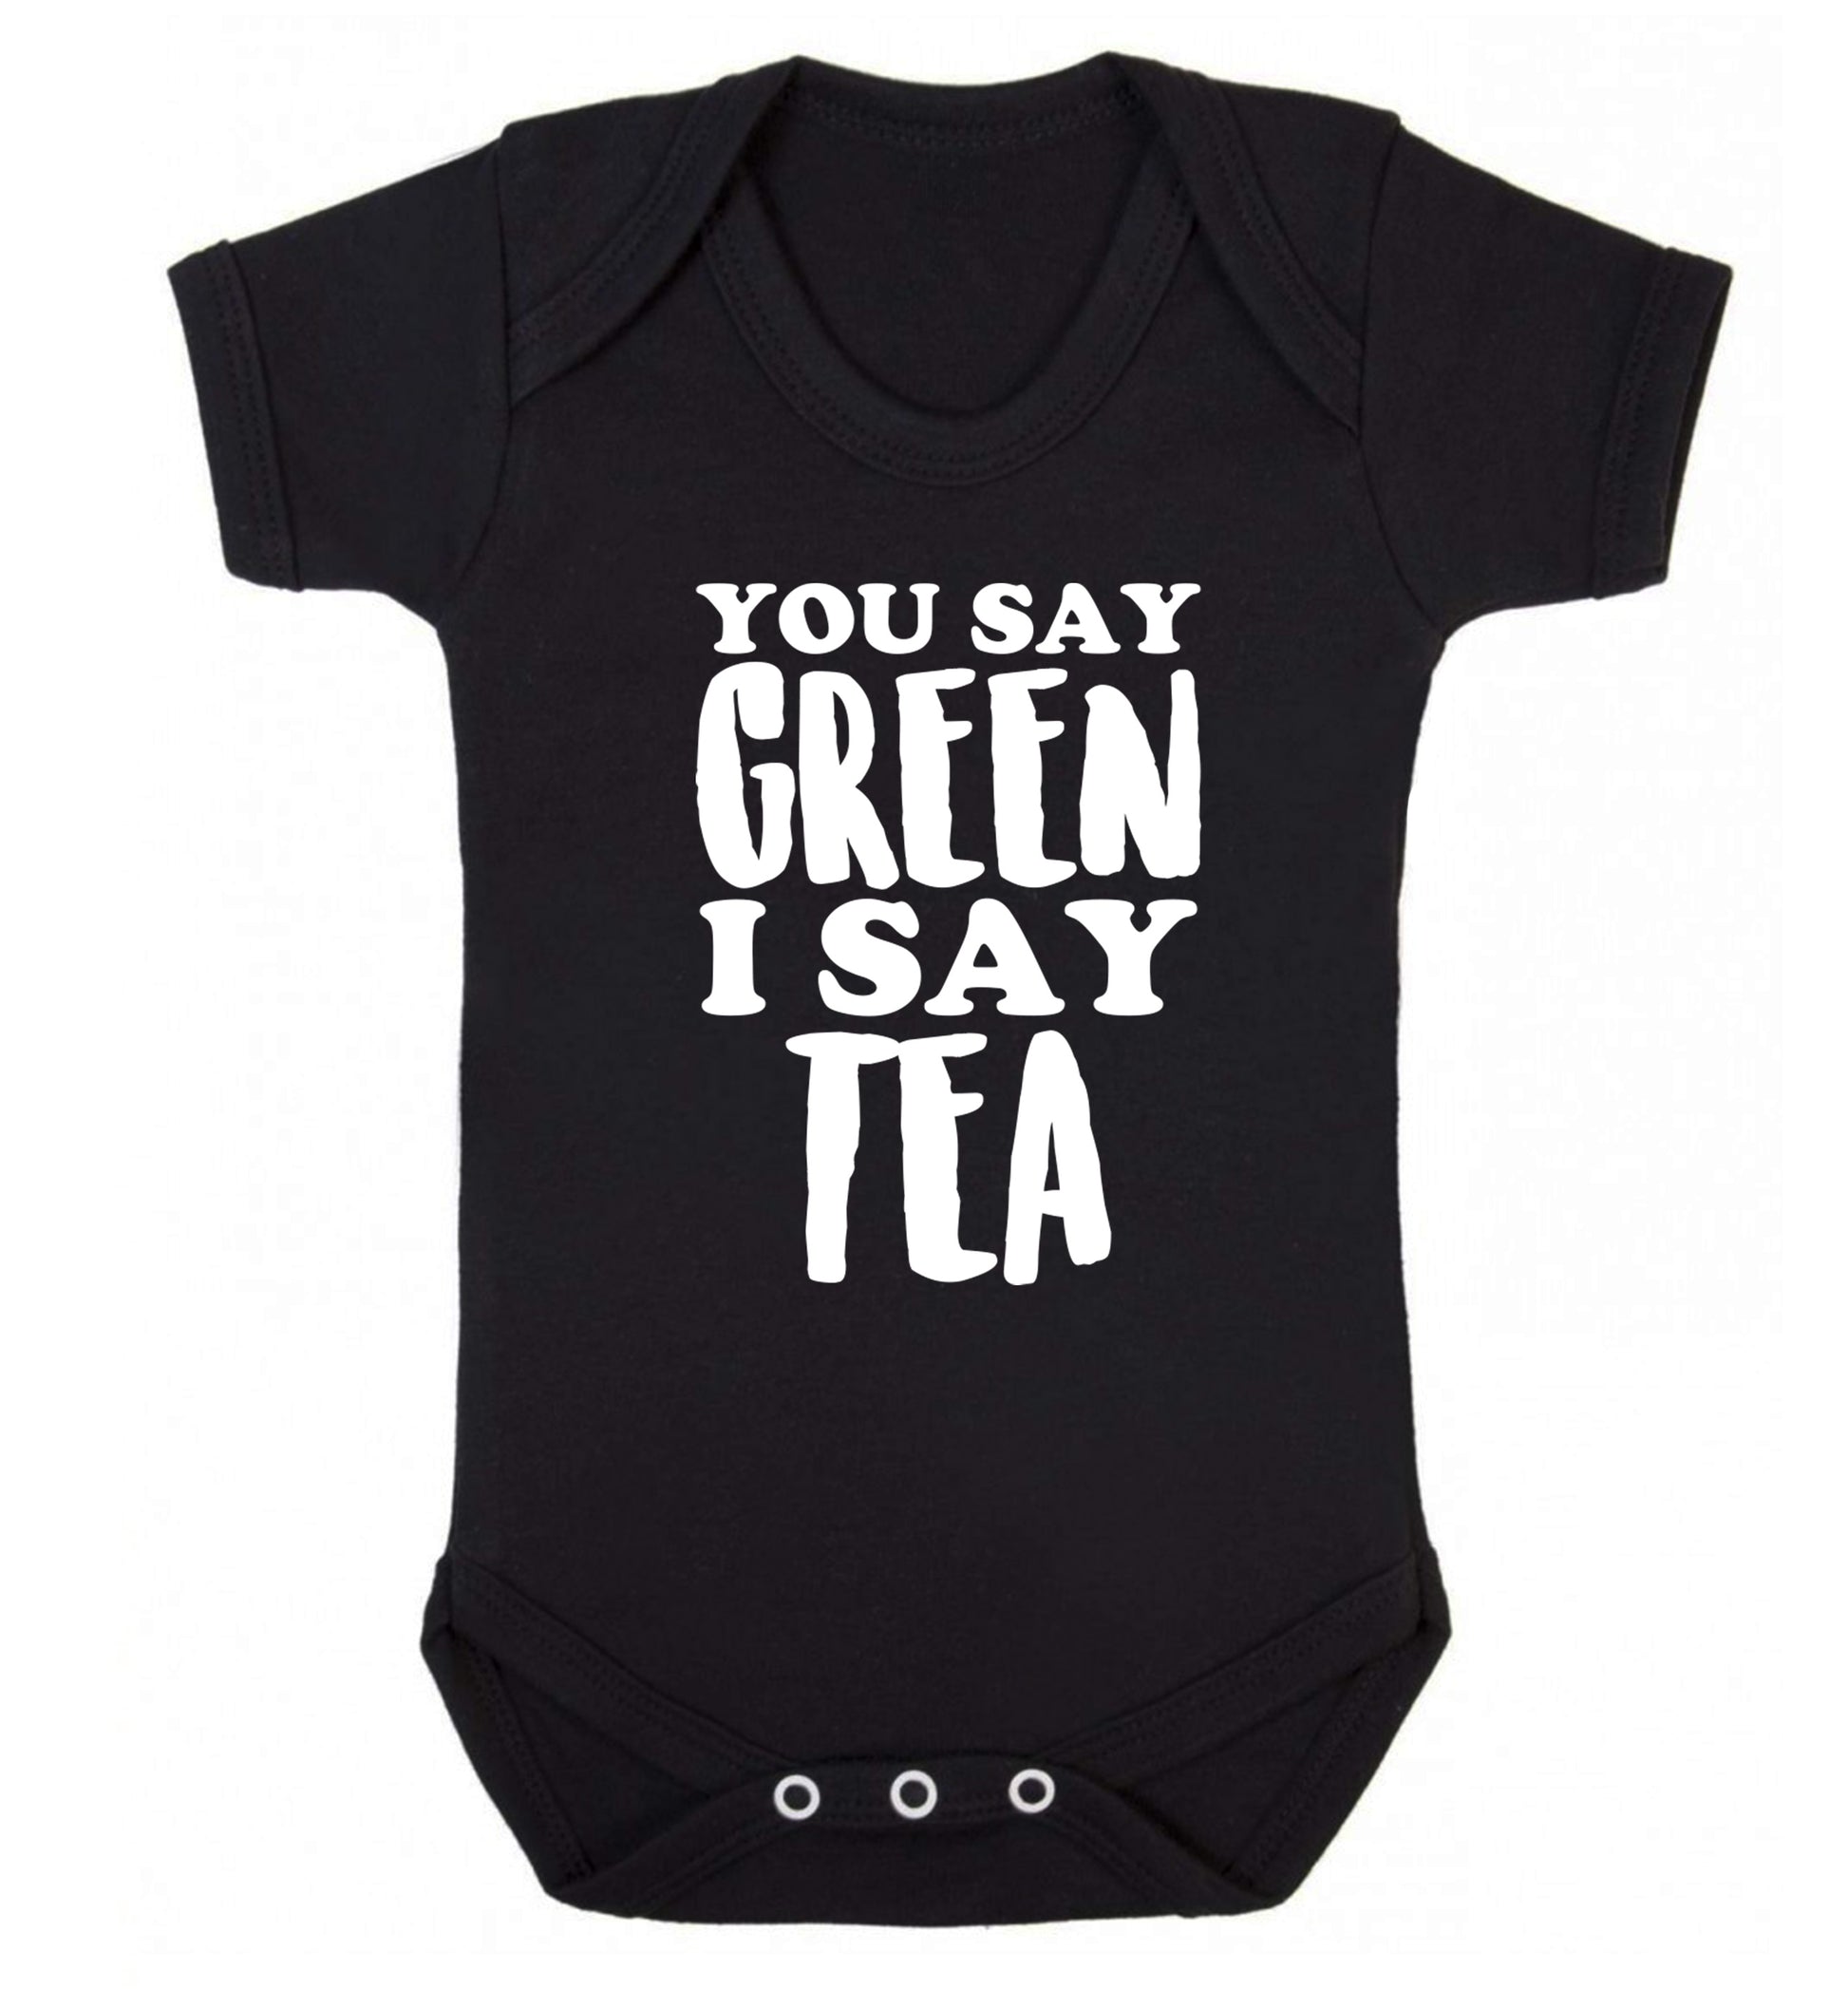 You say green I say tea! Baby Vest black 18-24 months